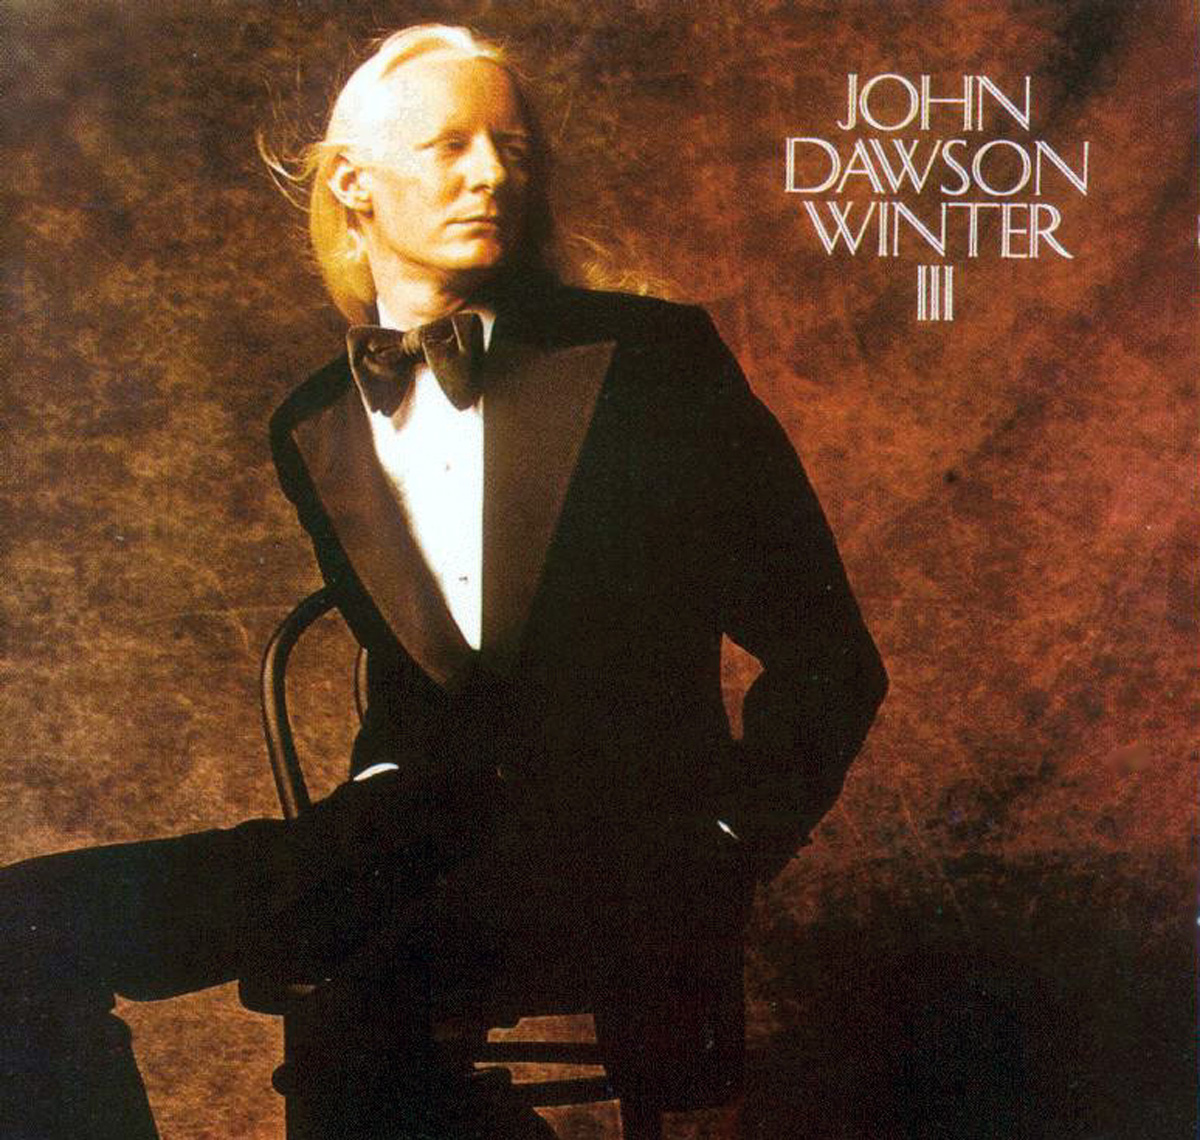 JOHNNY WINTER - John Dawson Winter III front cover photo https://vinyl-records.nl